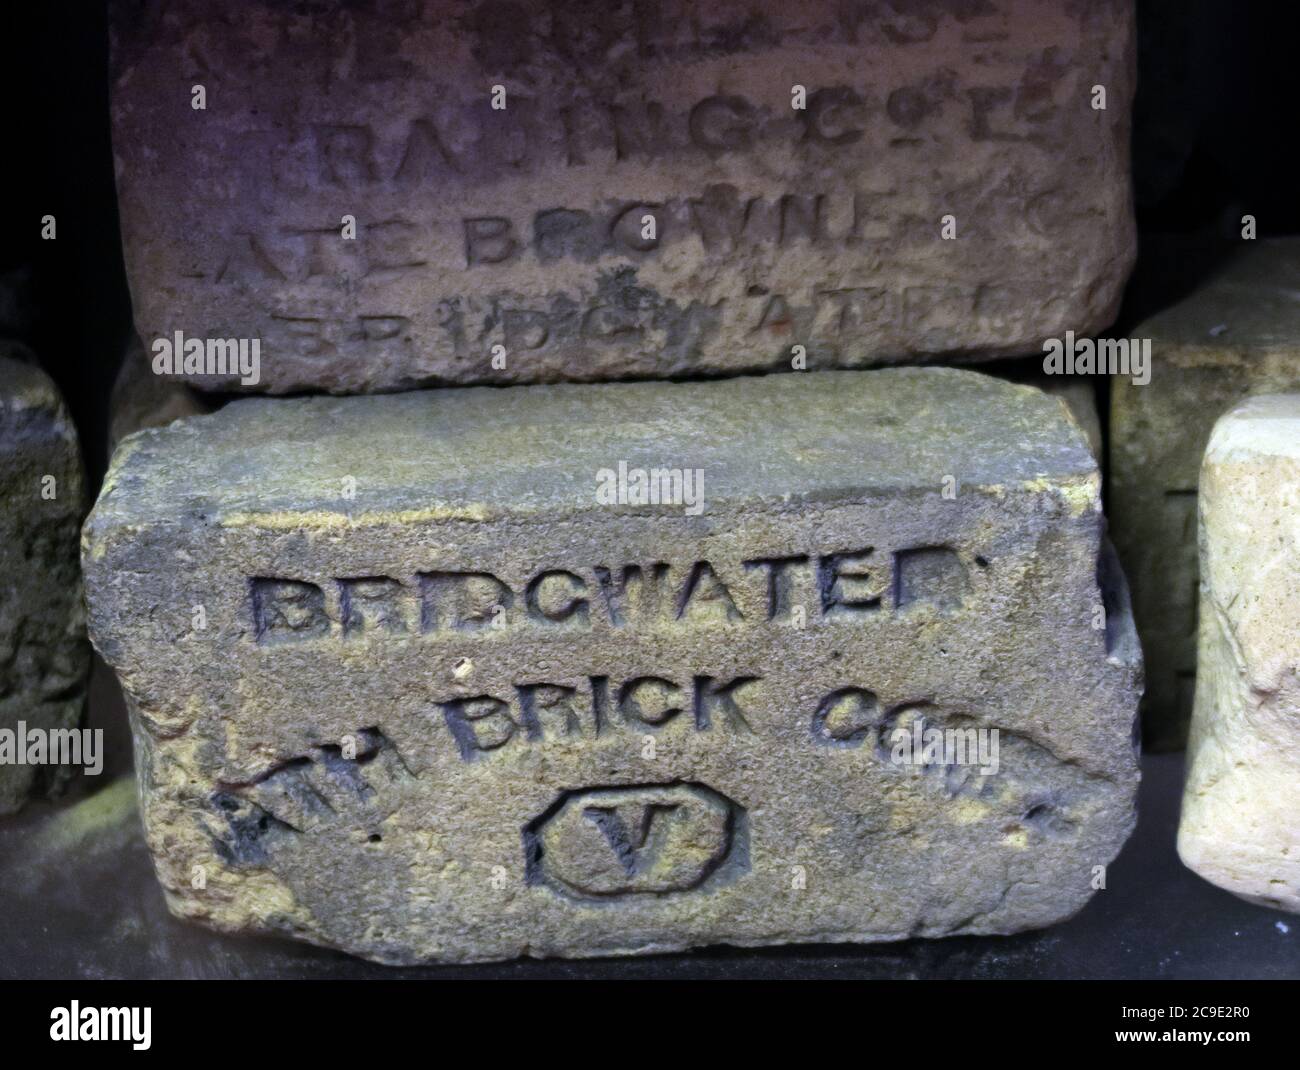 Bridgwater Brick Company, Bricks, storico, materiali da costruzione, Somerset, Sud-Ovest, Inghilterra, UK - Bath Brick Co Foto Stock